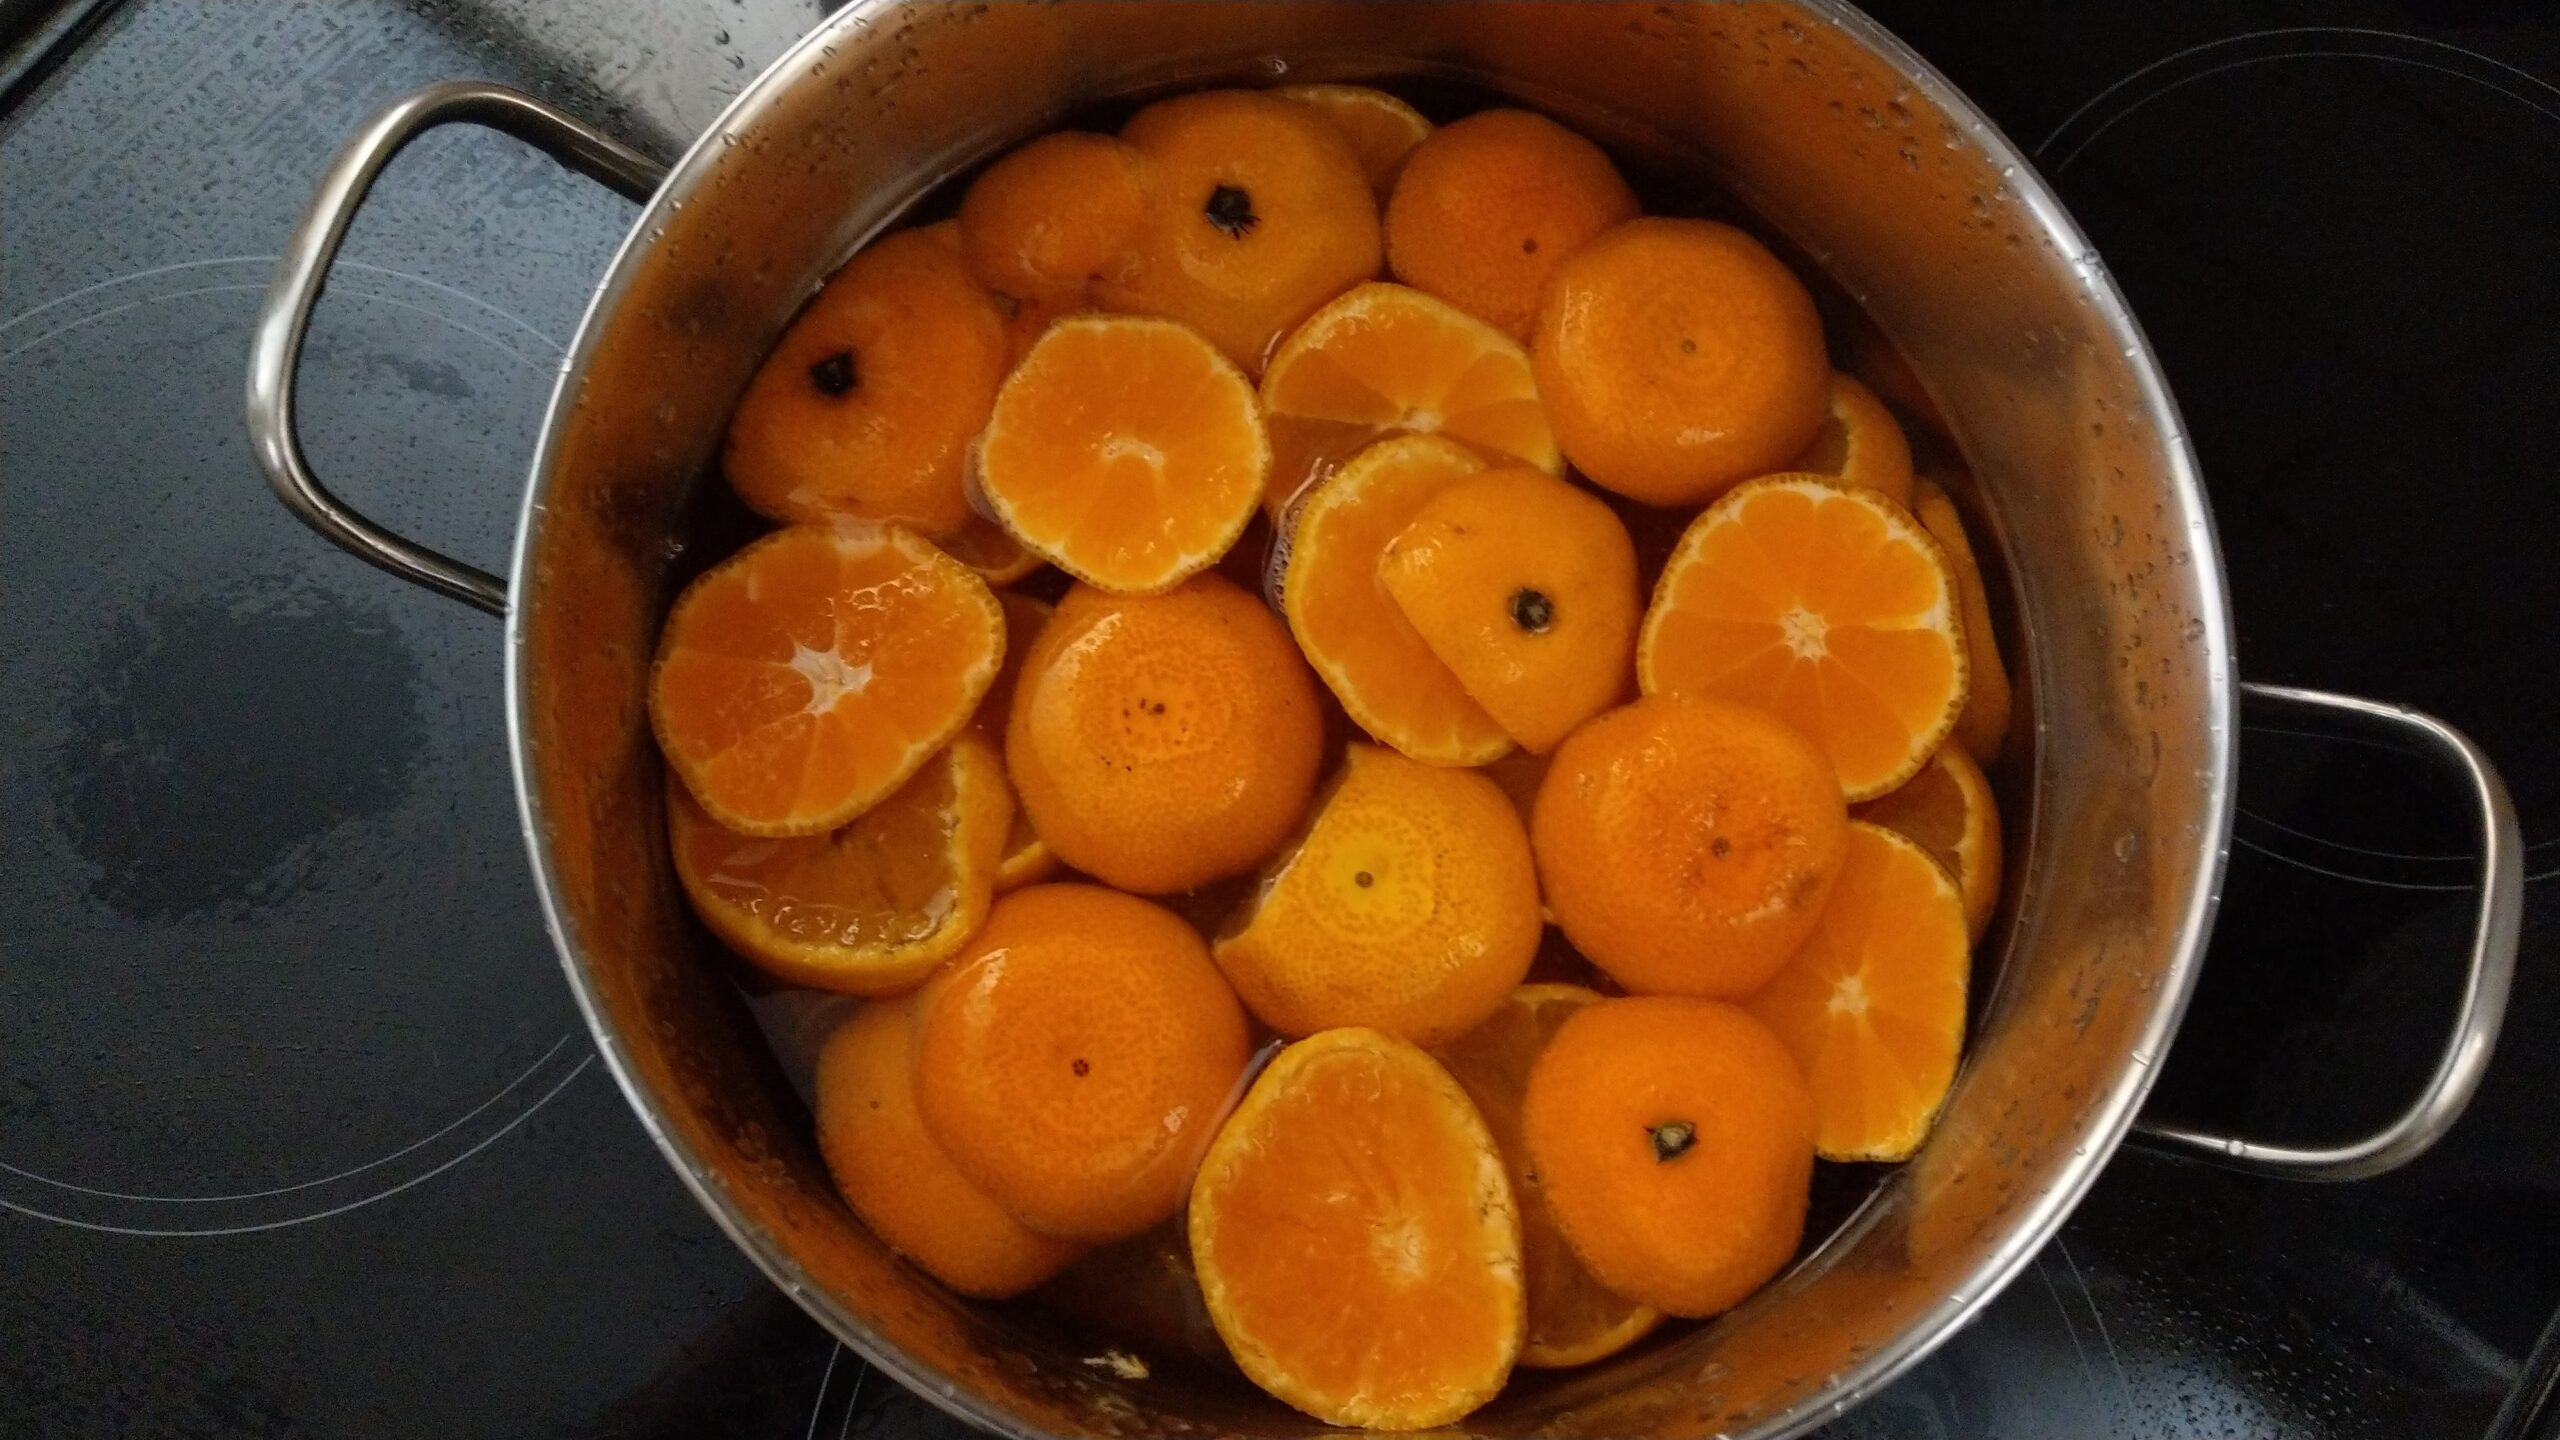 Mandarin orange slices simmering